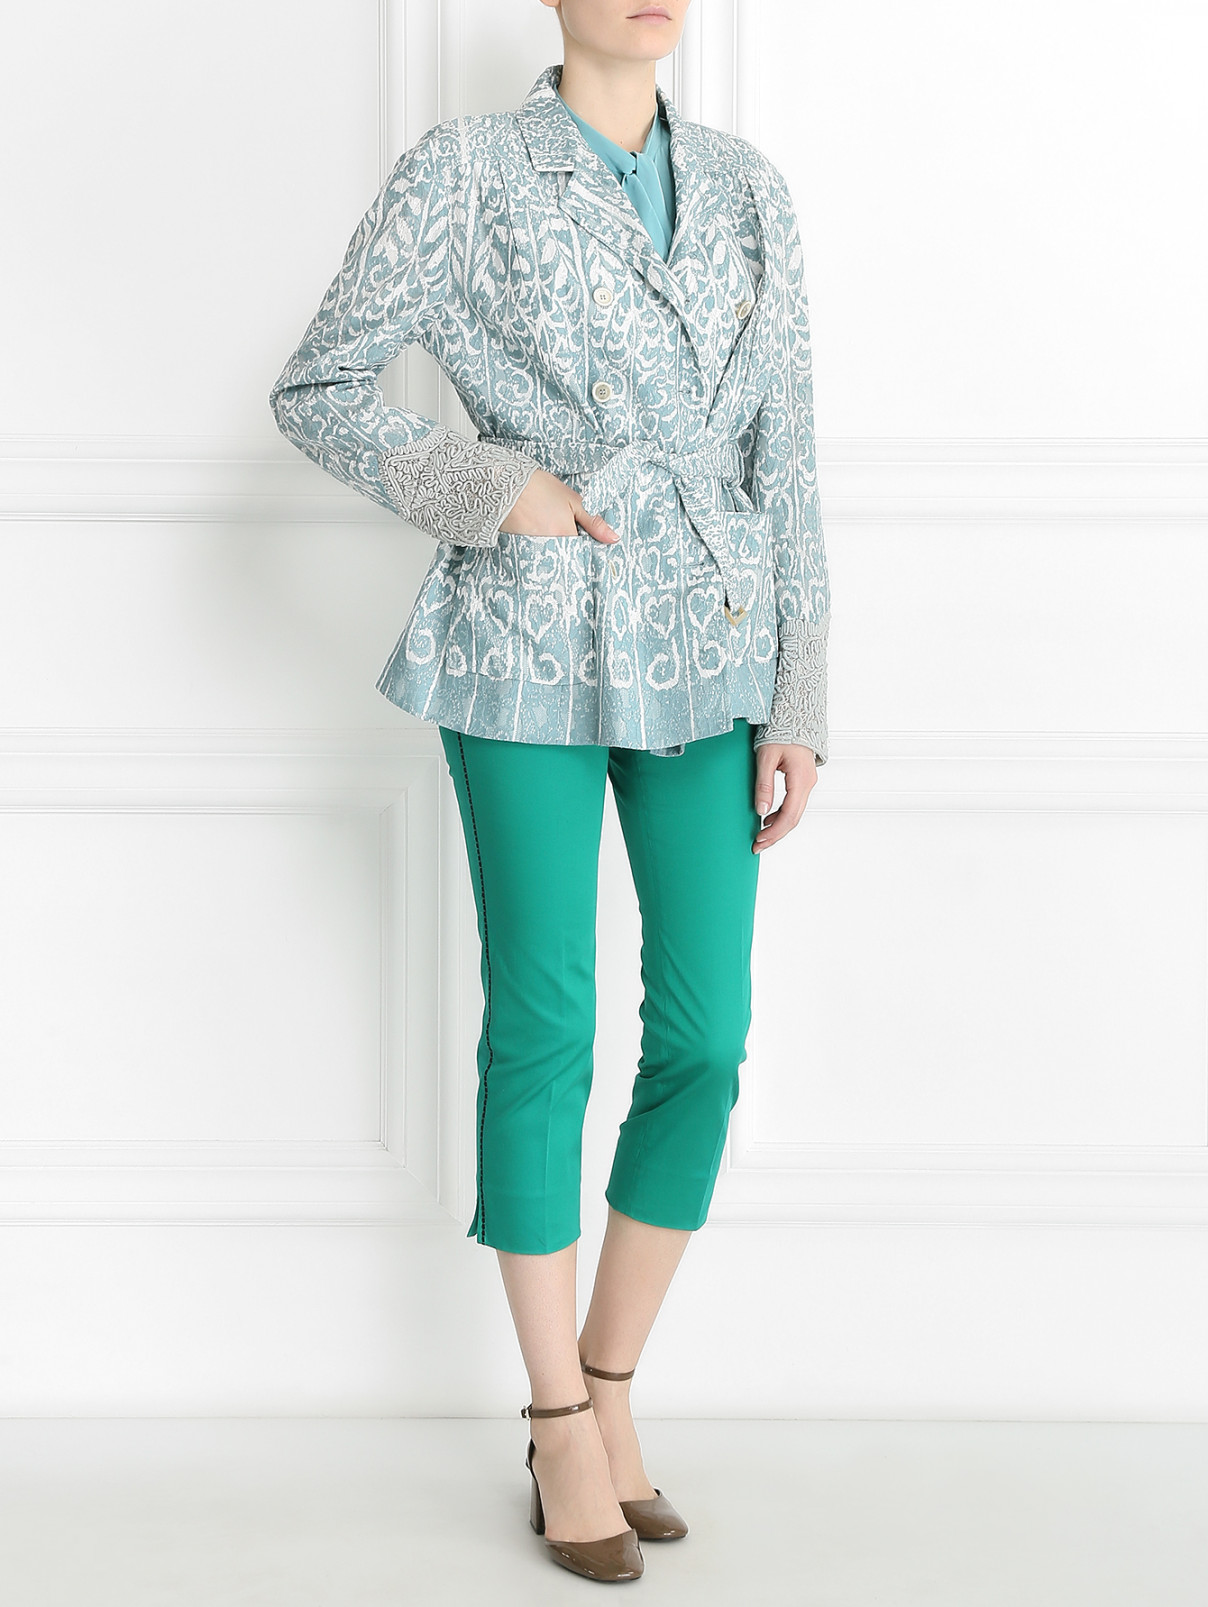 Блуза из шелка Moschino Cheap&Chic  –  Модель Общий вид  – Цвет:  Зеленый